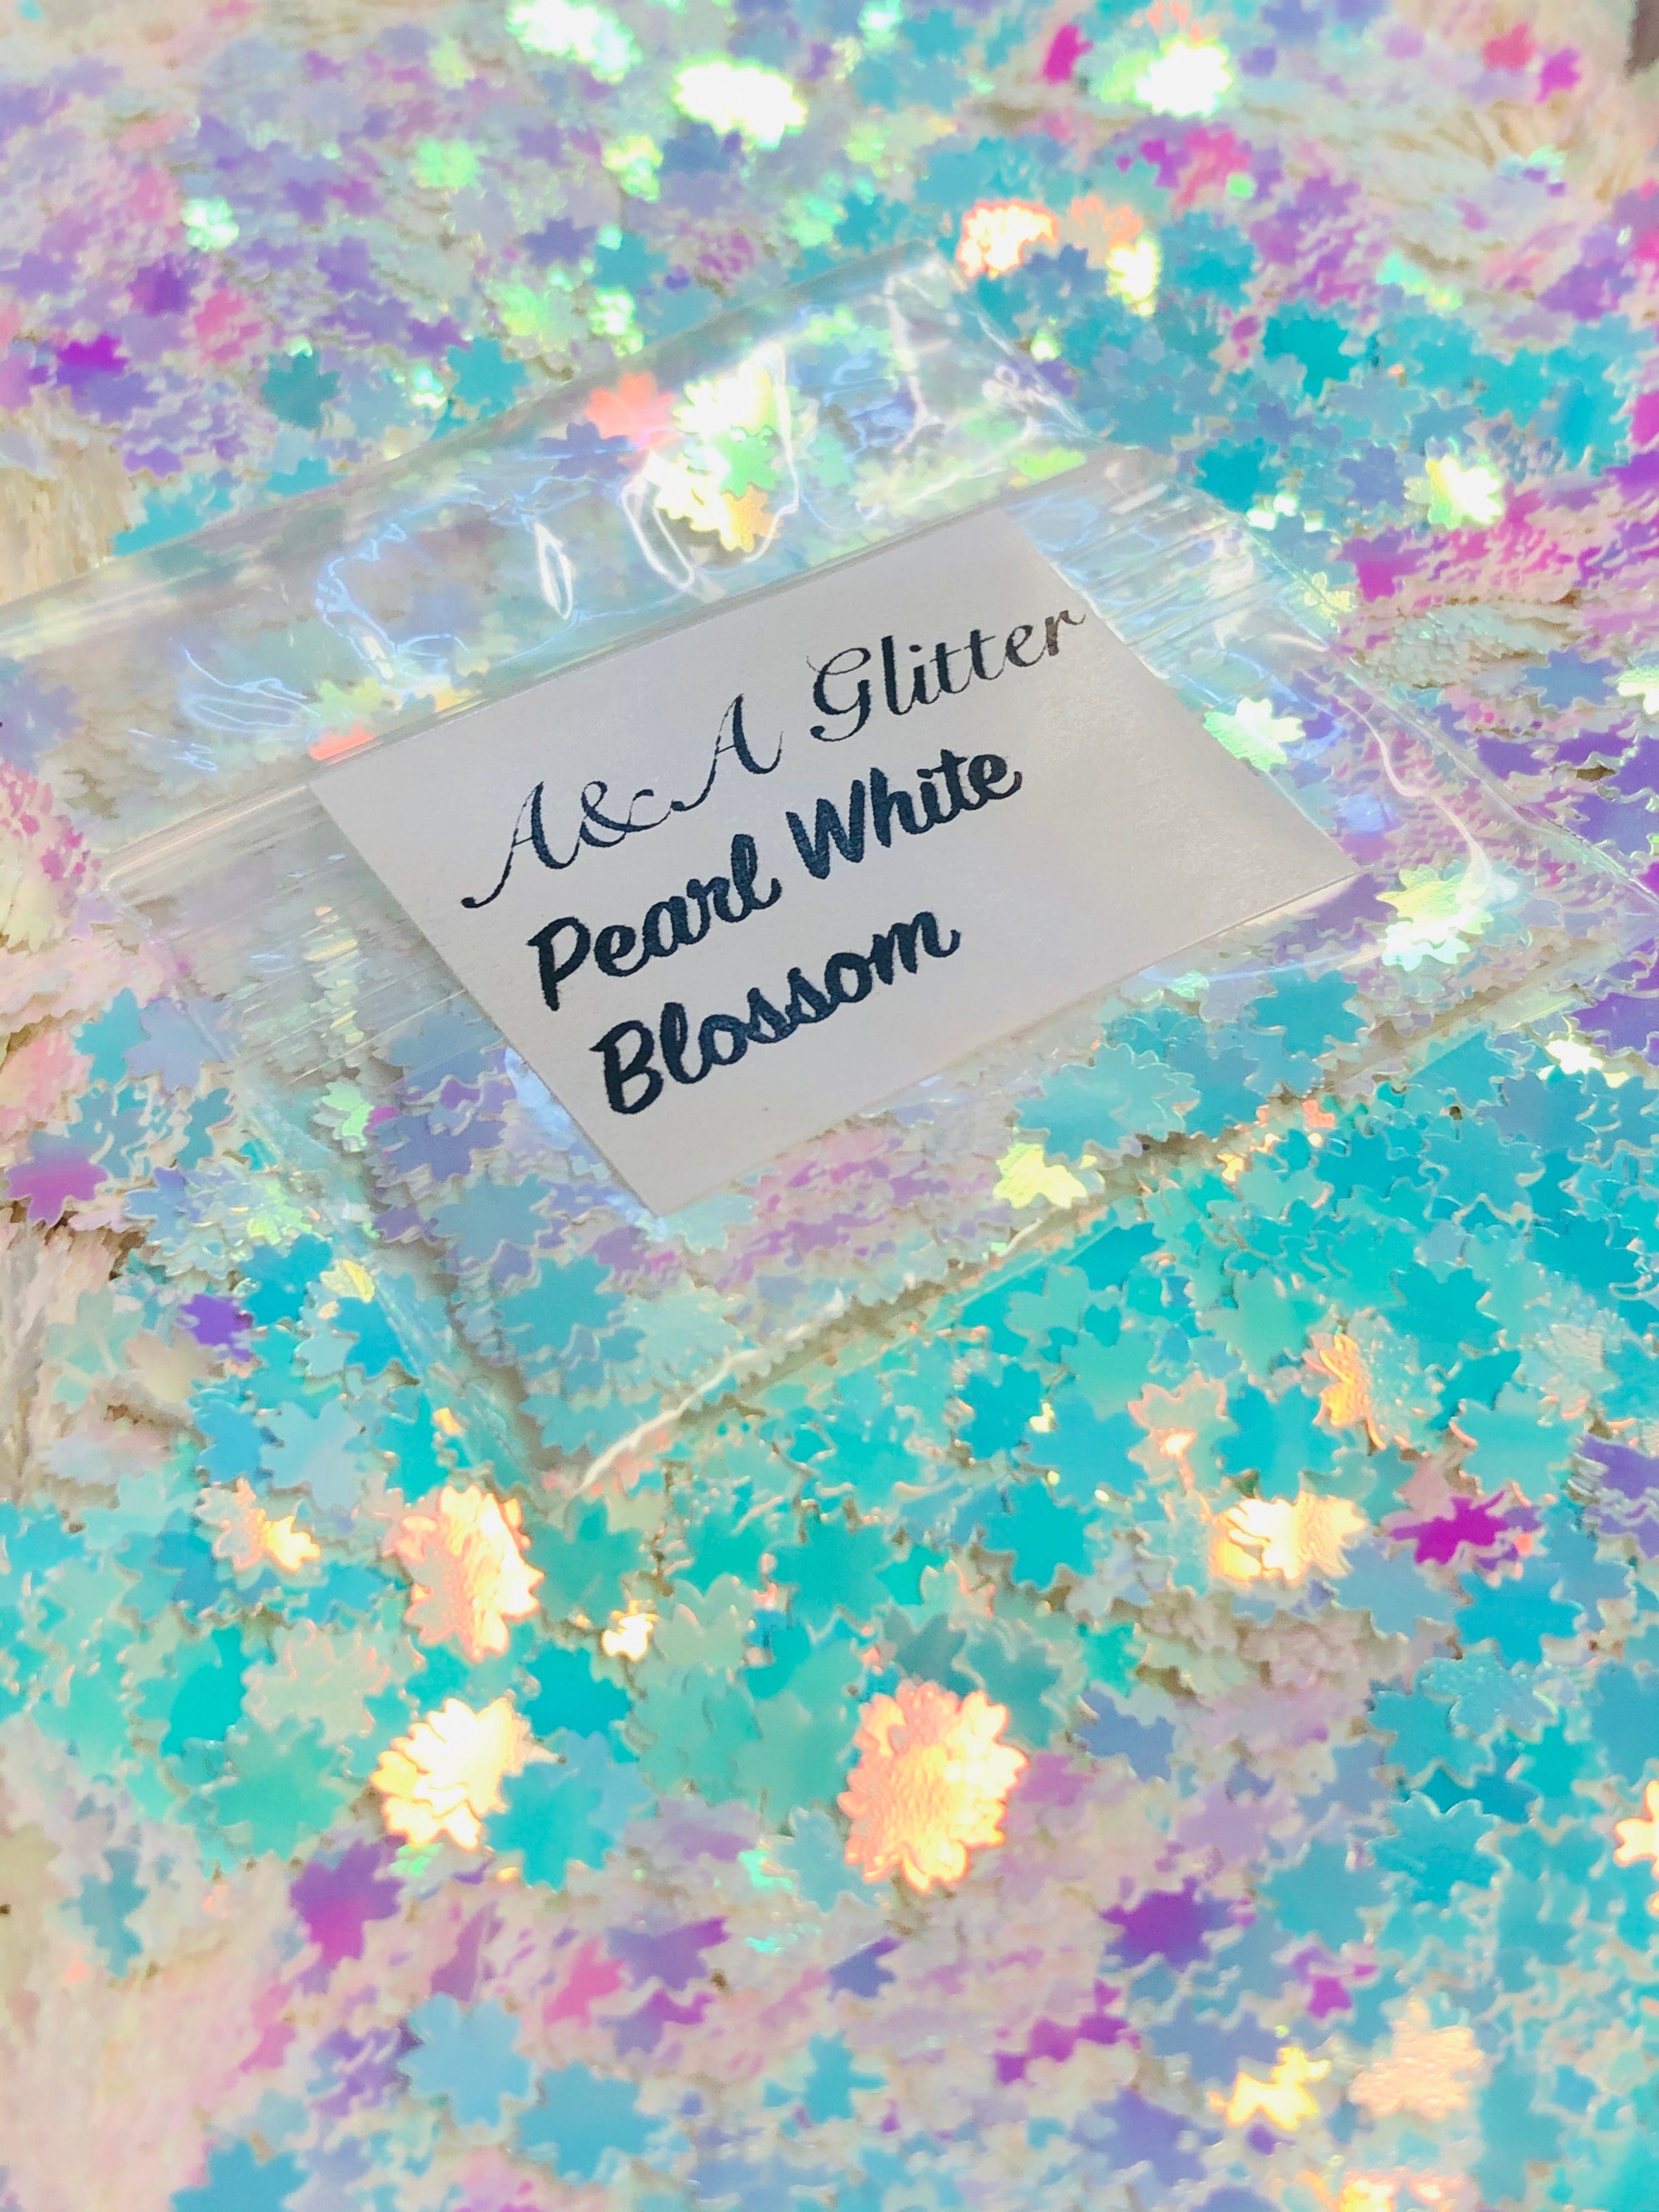 Pearl White Blossom